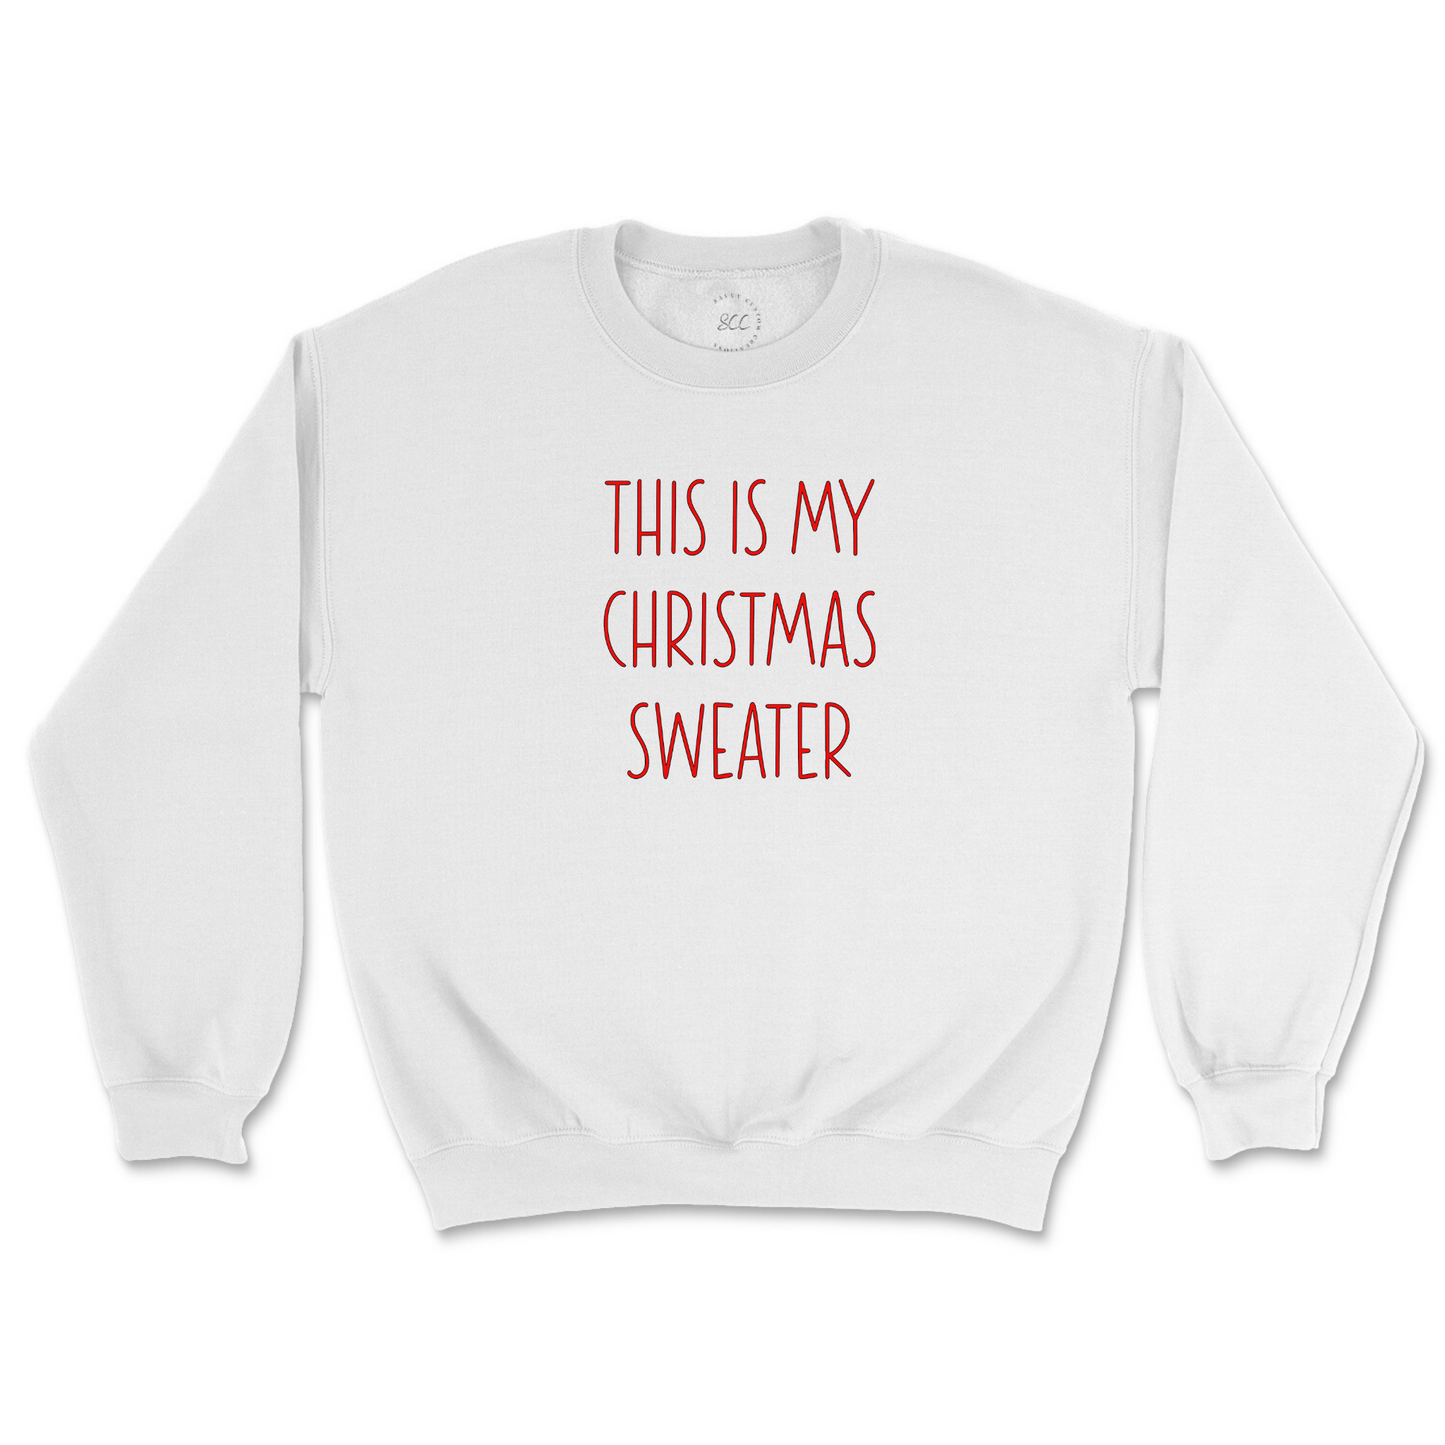 THIS IS MY CHRISTMAS SWEATER - Unisex Sweatshirt